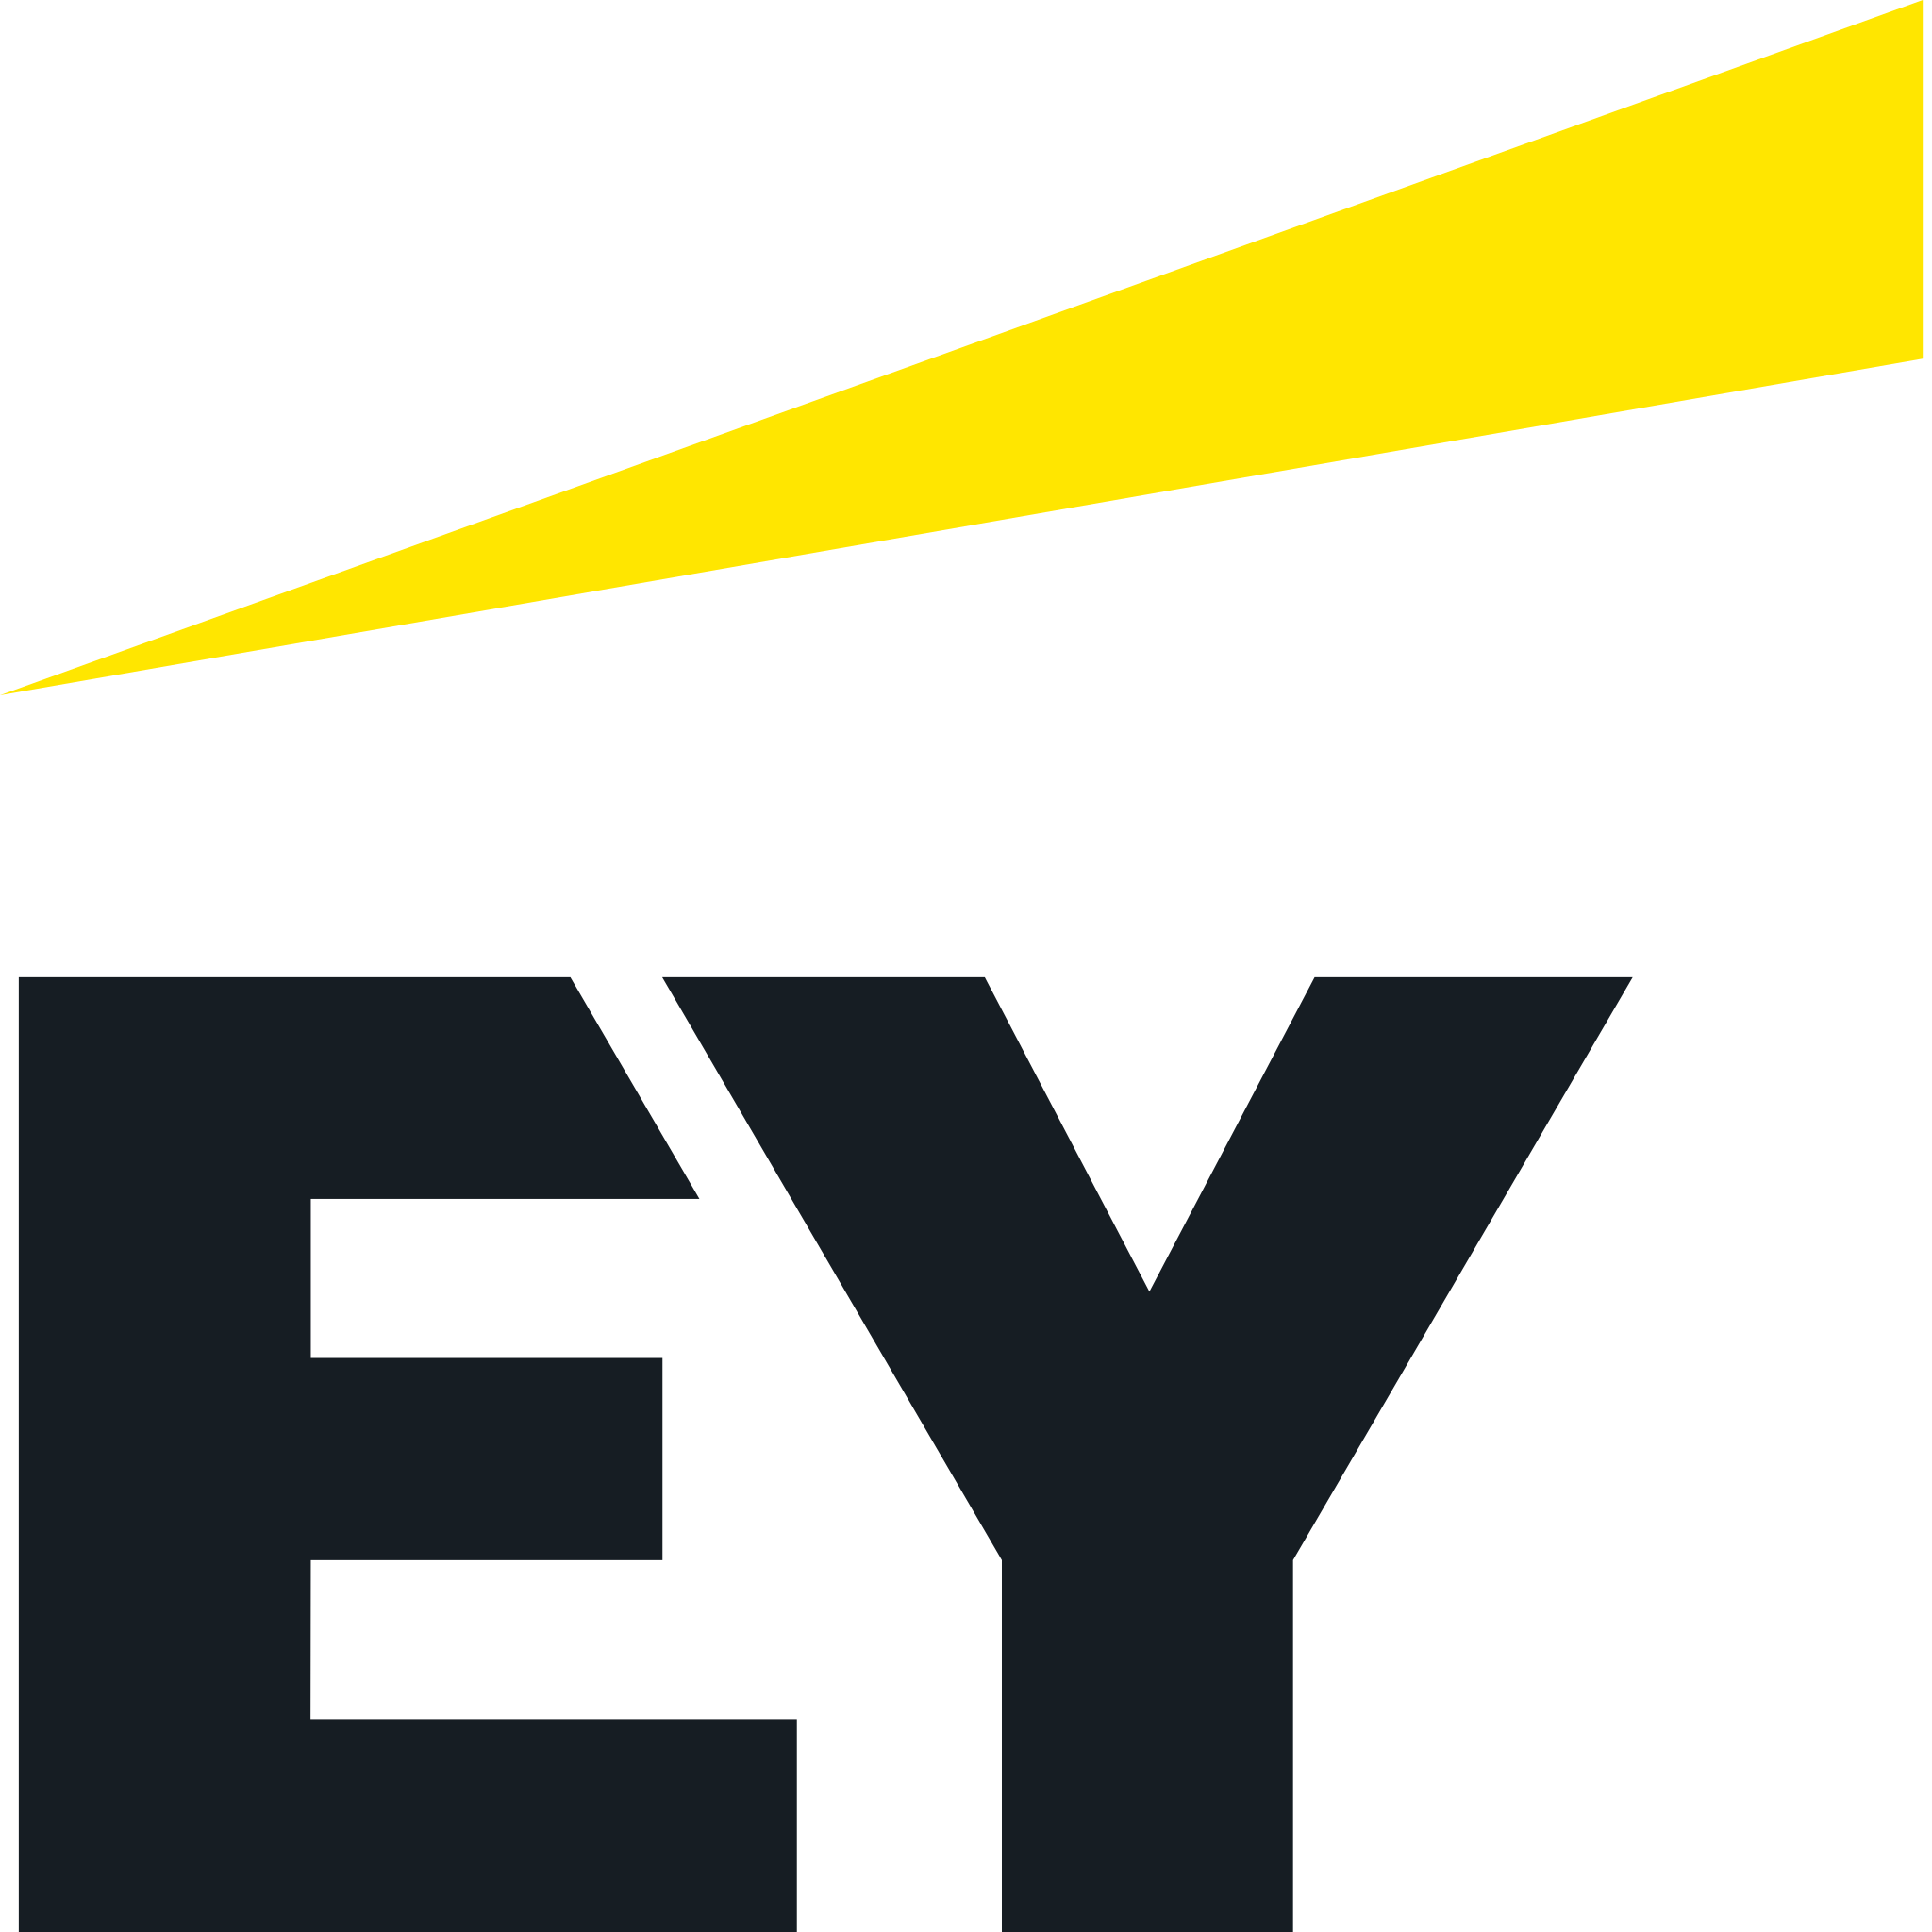 EY Logo PNG Images HD